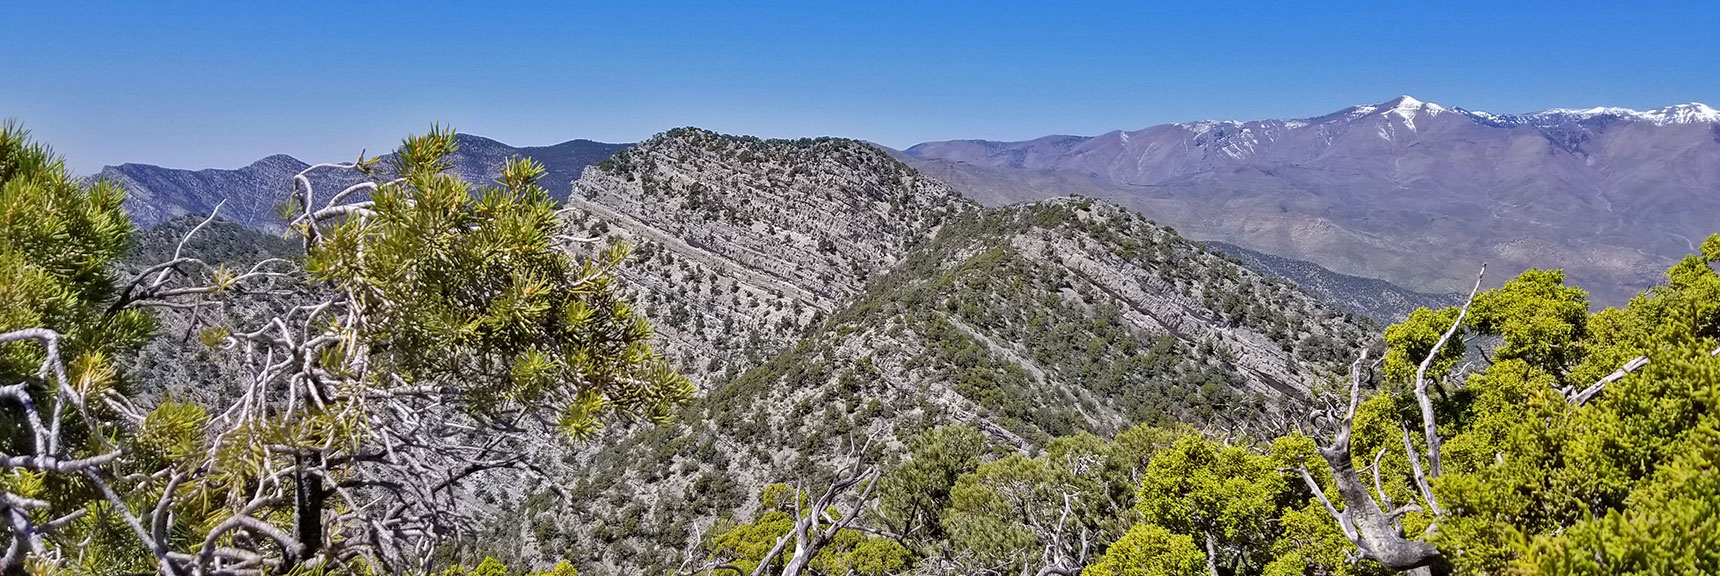 Keystone Thrust Looking West from Near El Padre Mountain, La Madre Mountains Wilderness, Nevada